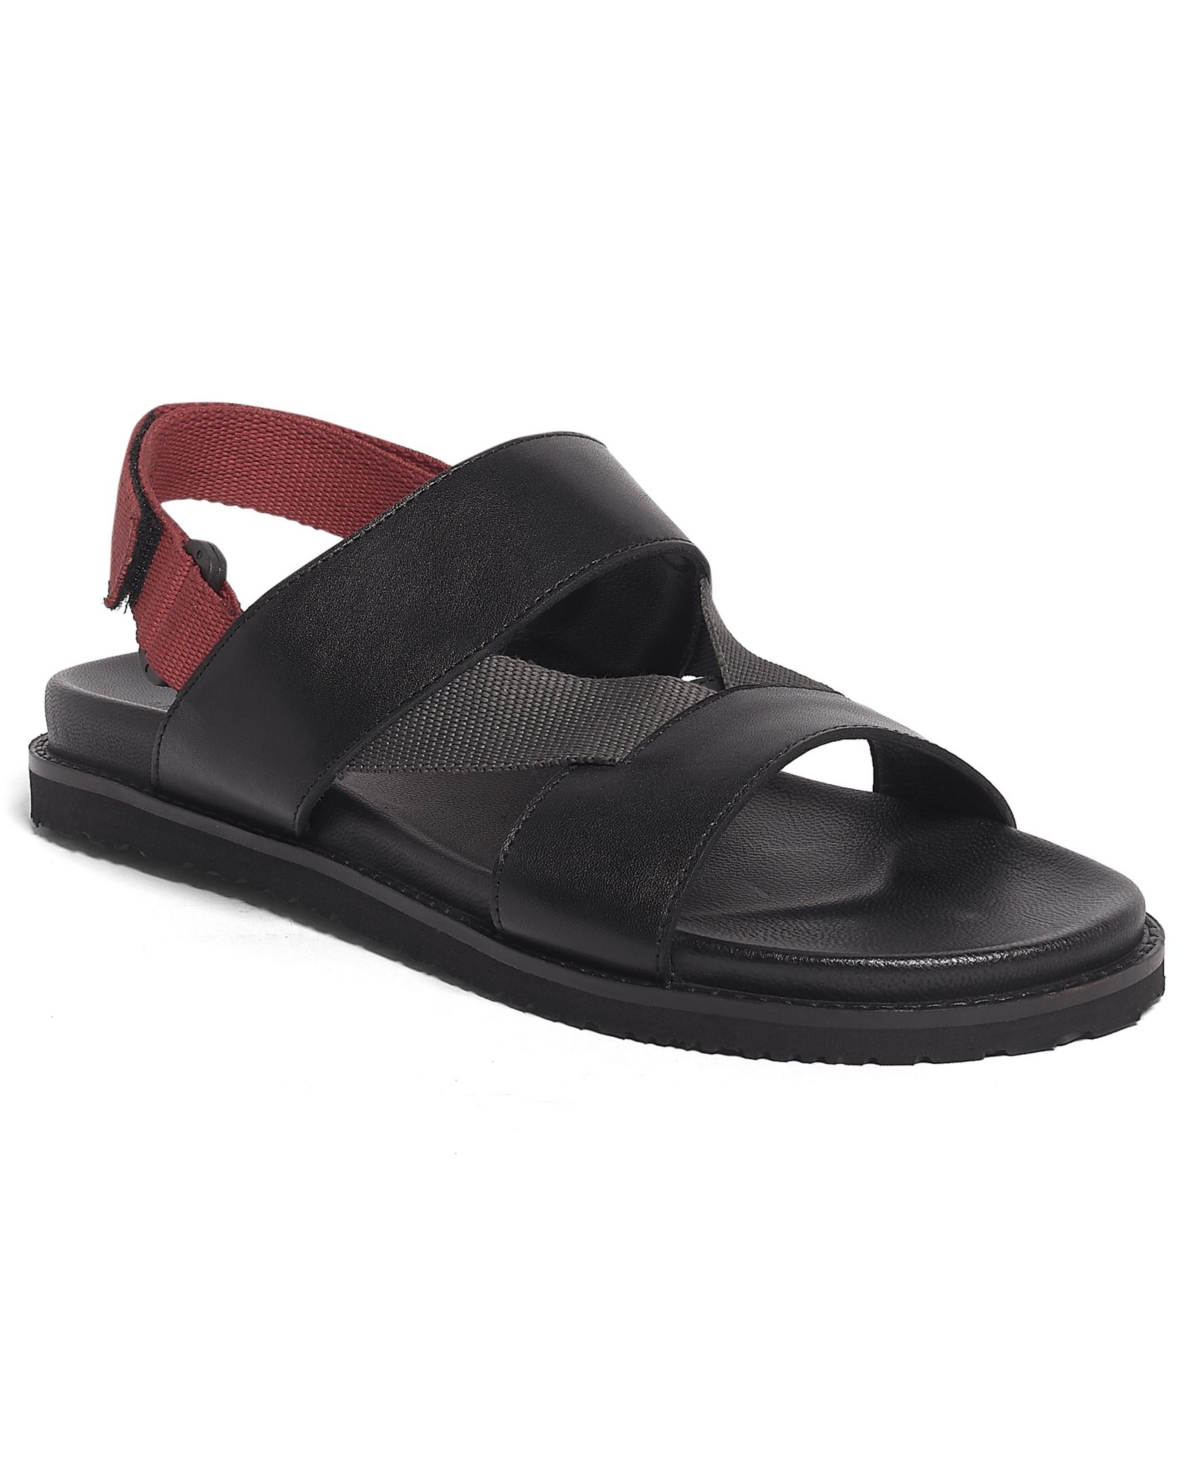 Men's Malibu Comfort Sandals - Black